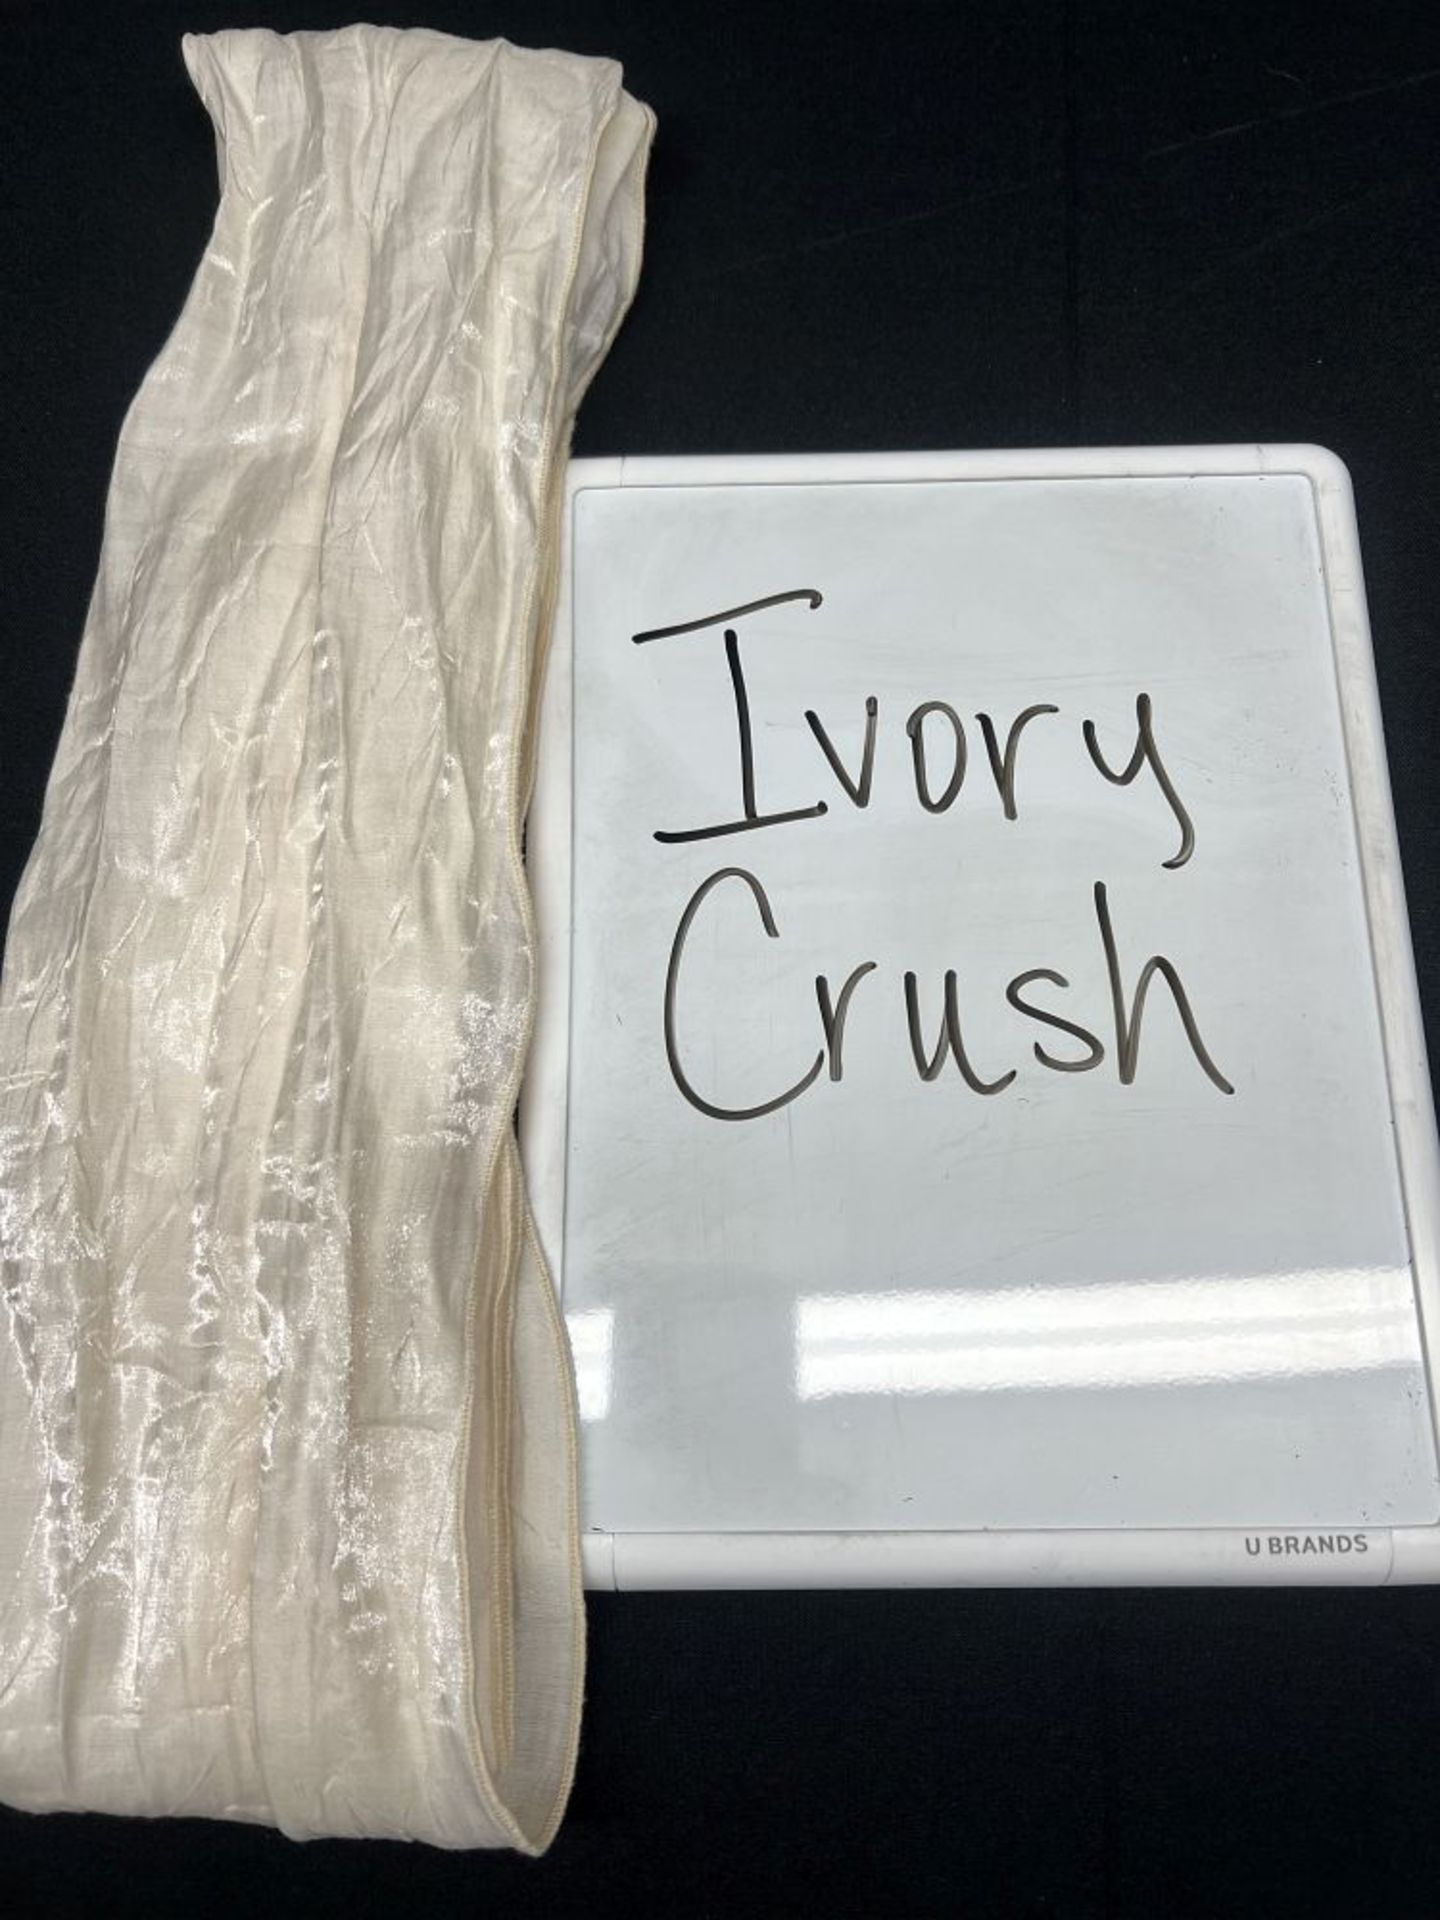 72" x 72" Ivory Crush Tablecloth